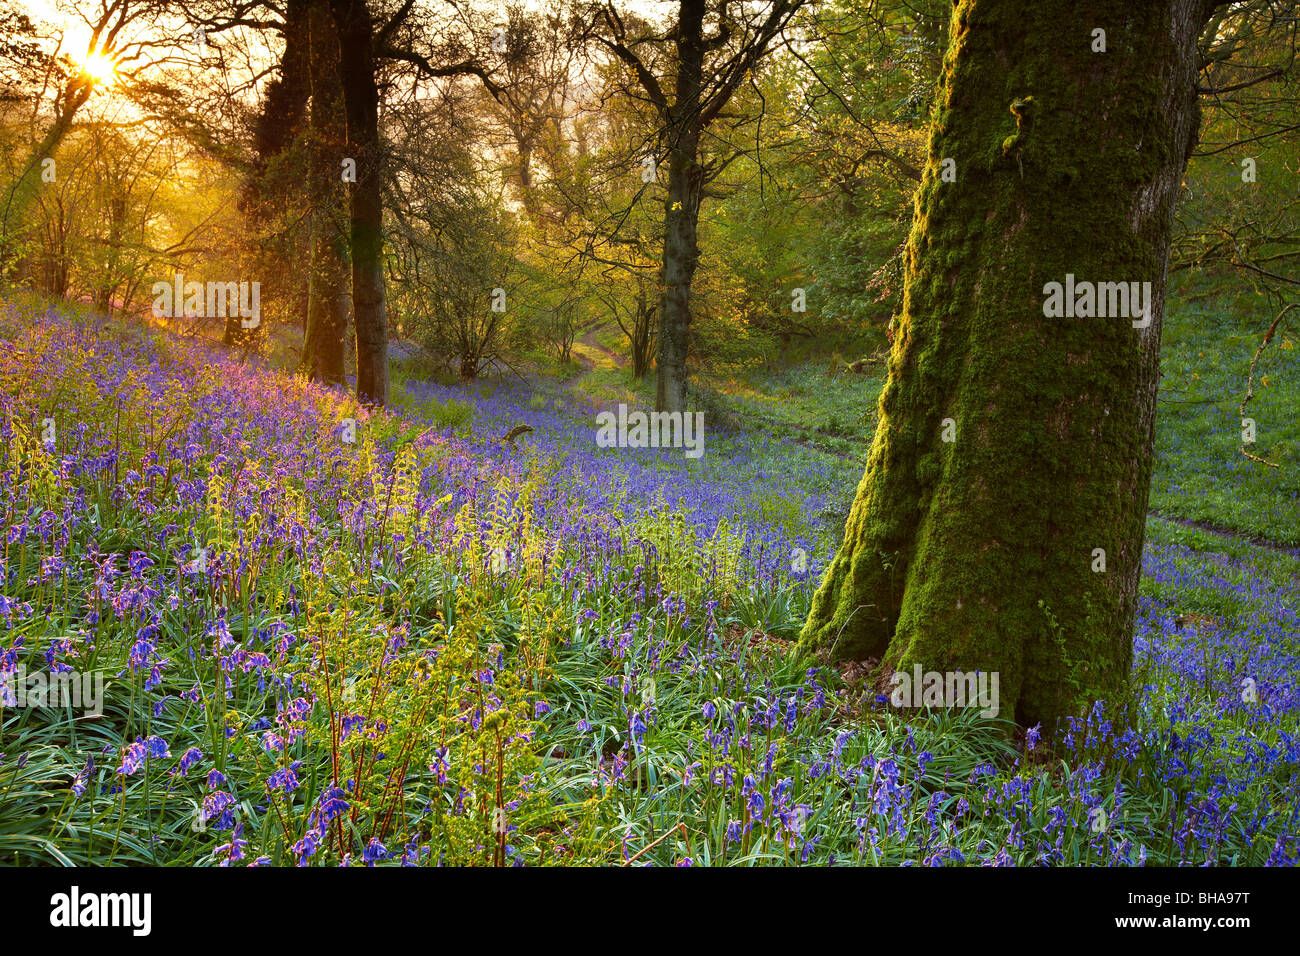 Amanecer en la bluebell woods en Batcombe, Dorset, Inglaterra, Reino Unido. Foto de stock